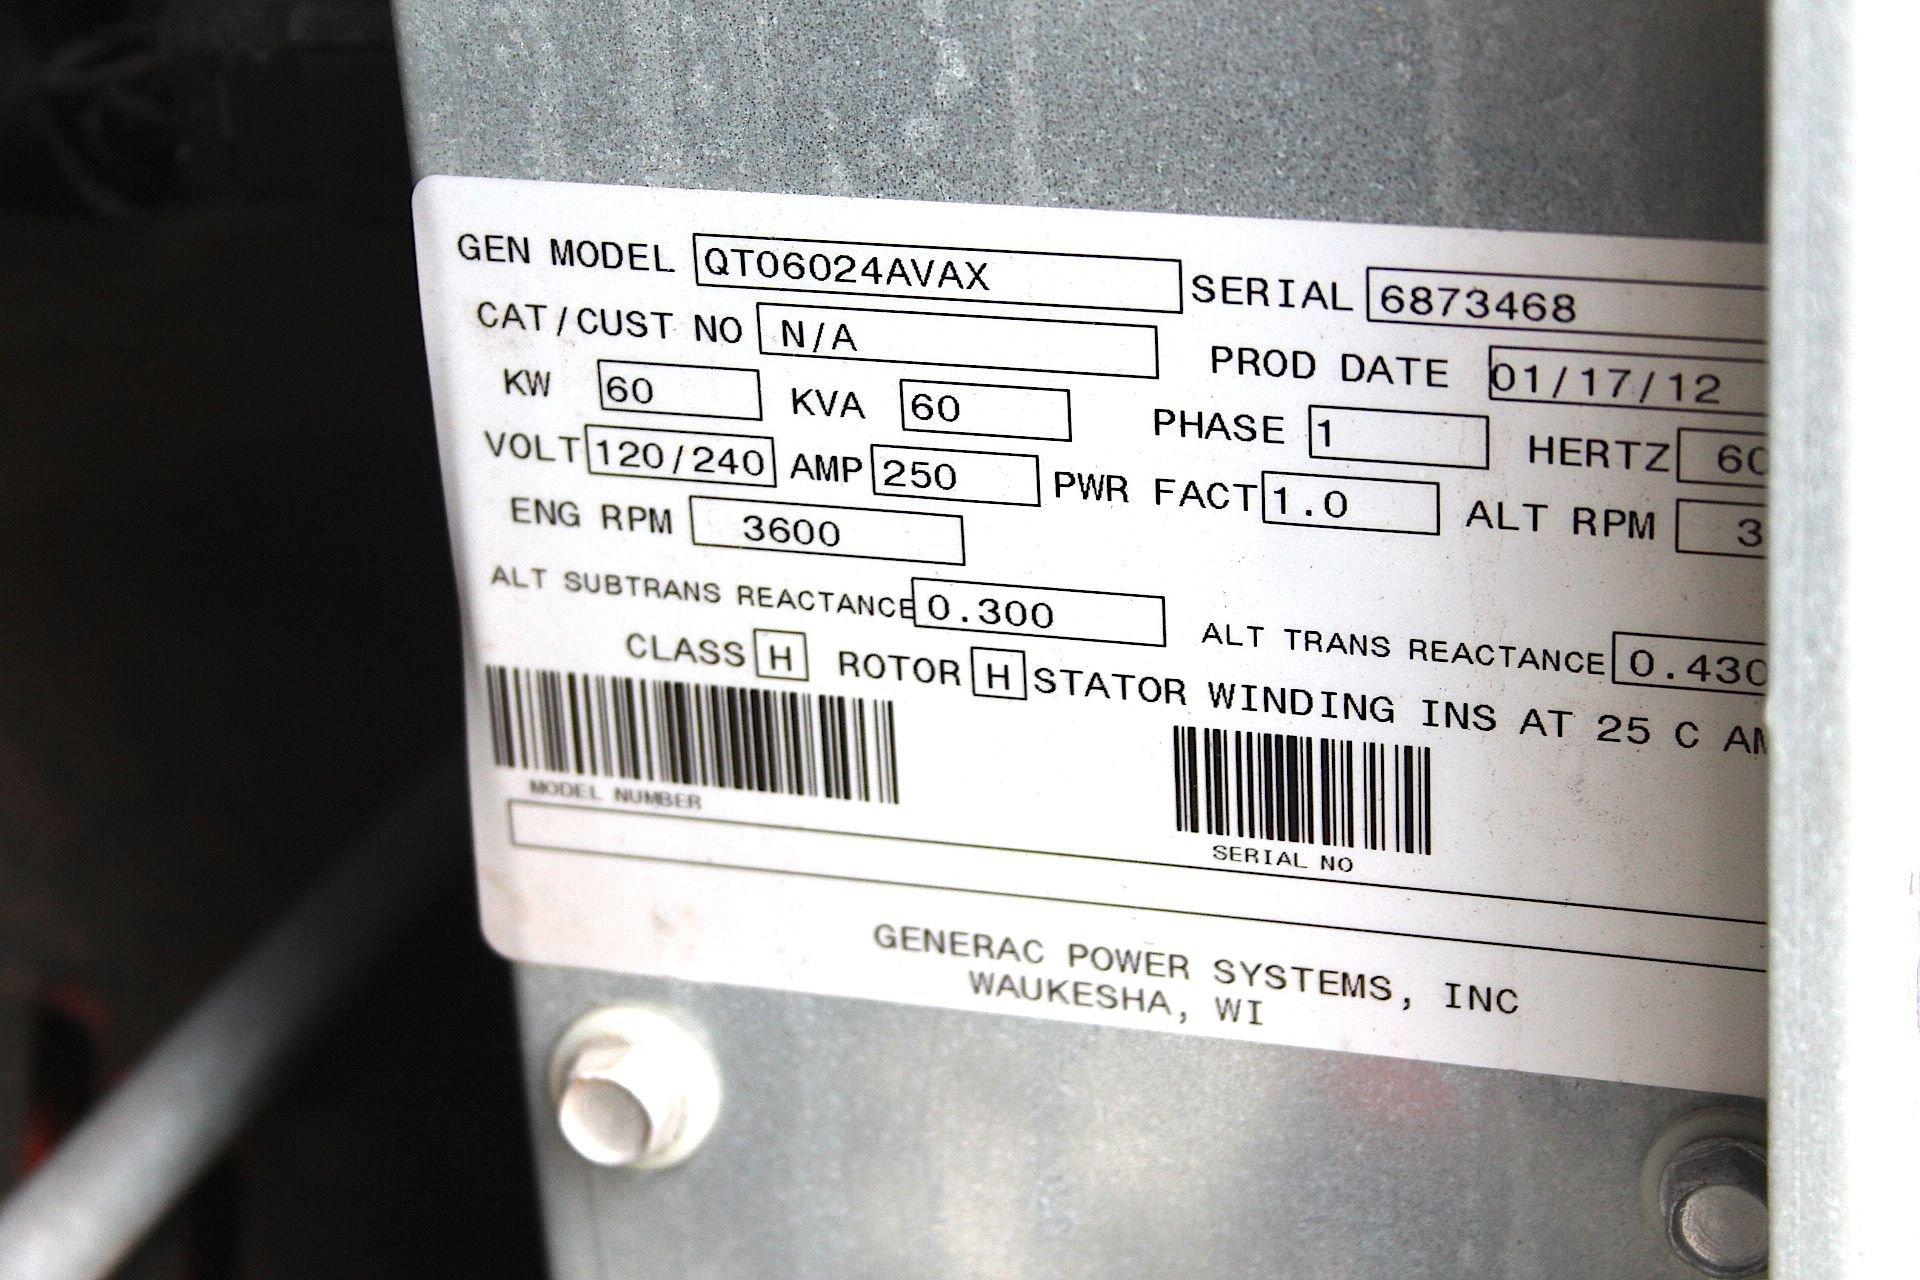 GENERAC 60kw LP Commercial Standby Generator